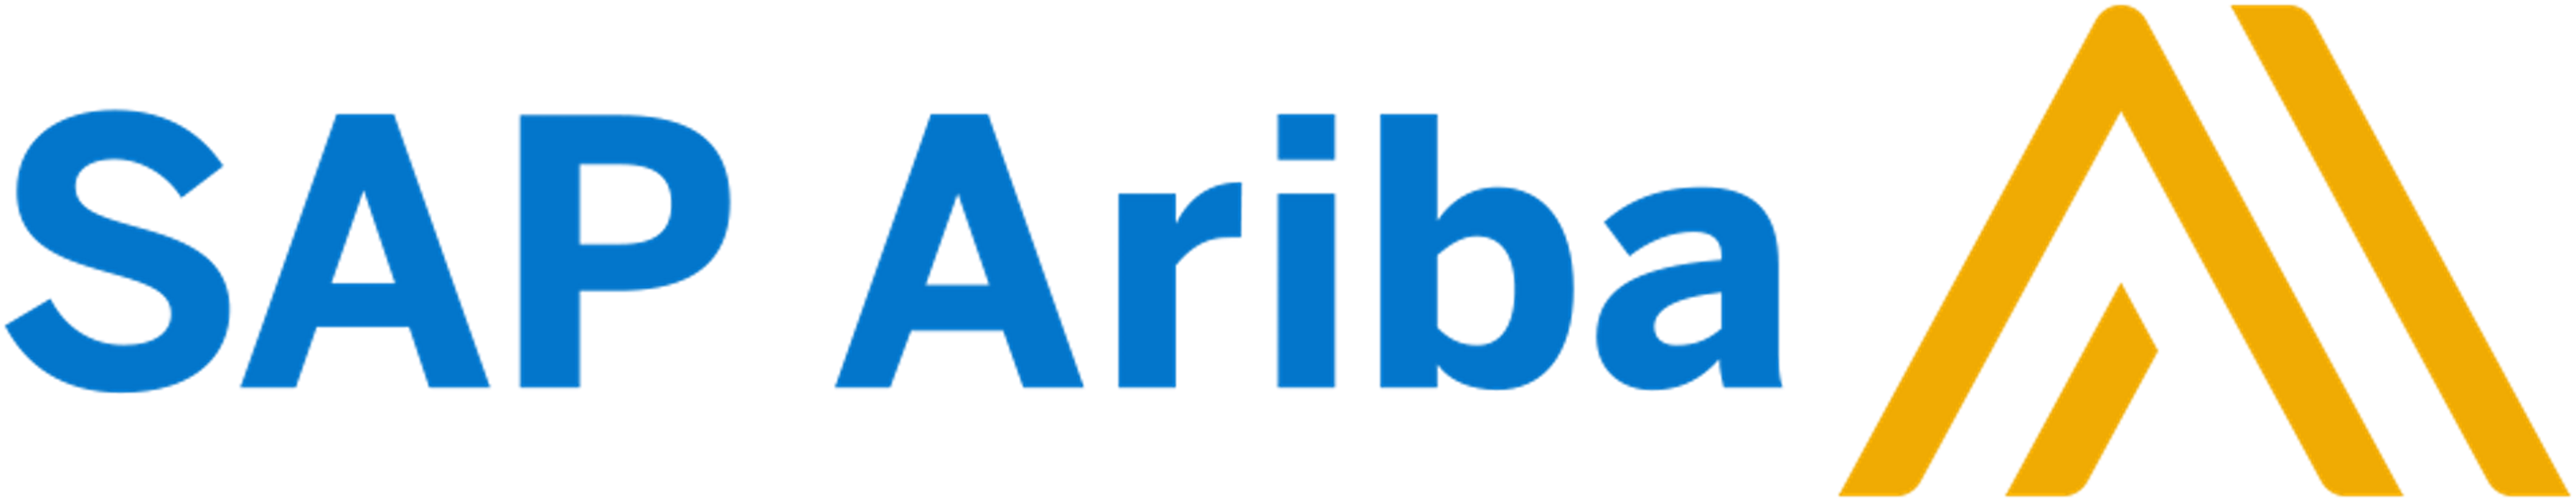 SAP Ariba Logo - How SAP Ariba educates and enables digital transformation through